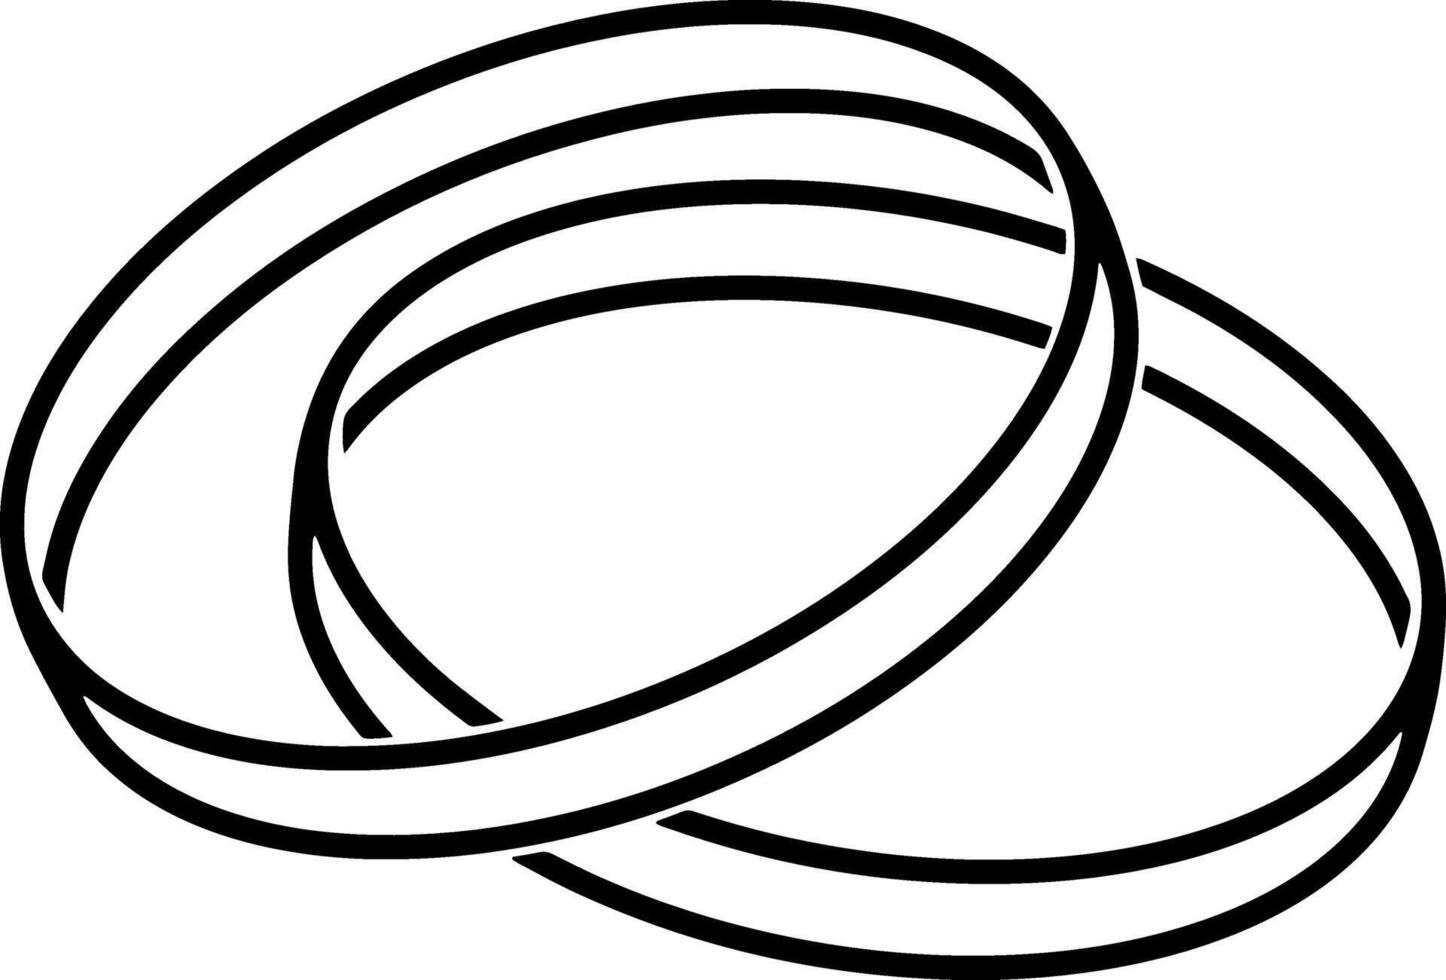 Doodle wedding ring icon Hand drawn line art Sketch vector illustration